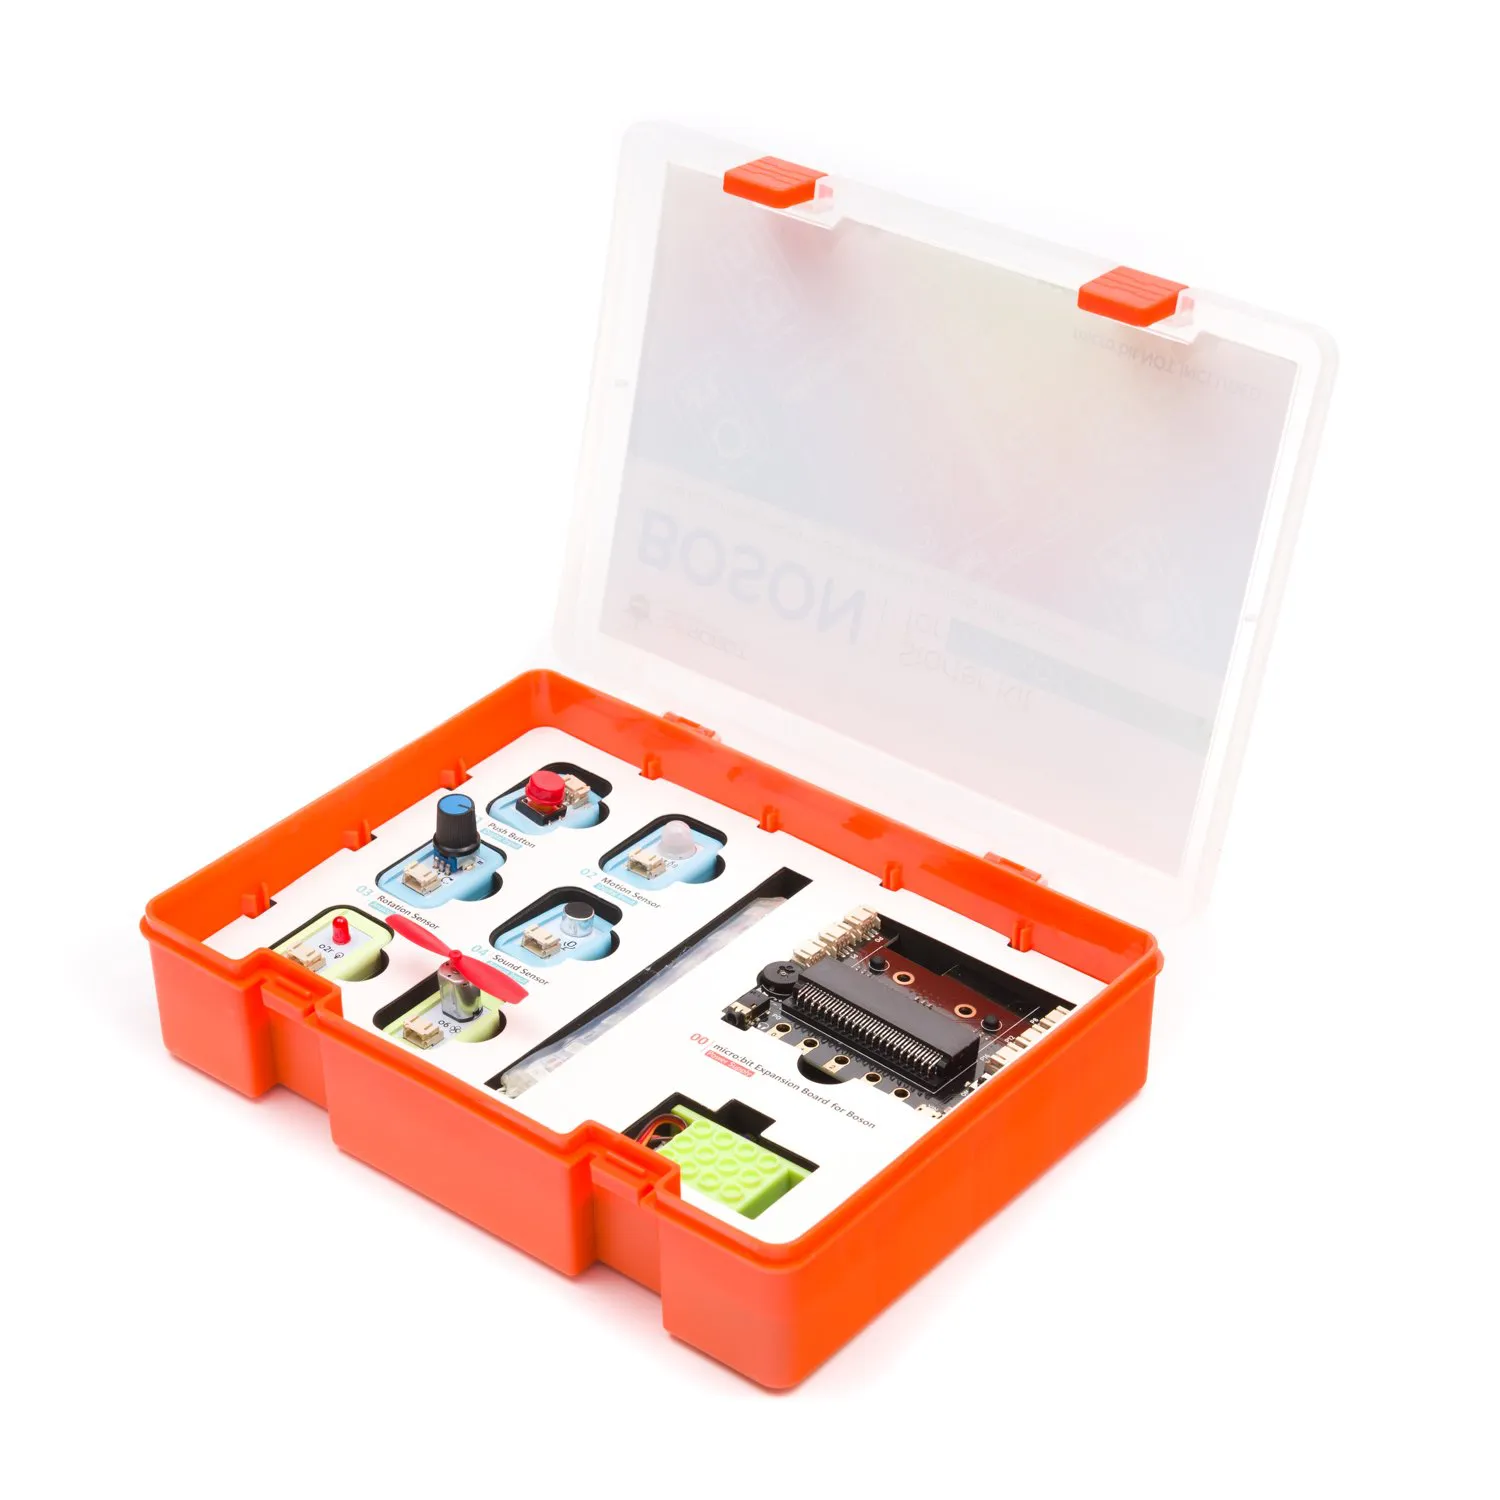 Photo of Boson Starter Kit for micro:bit